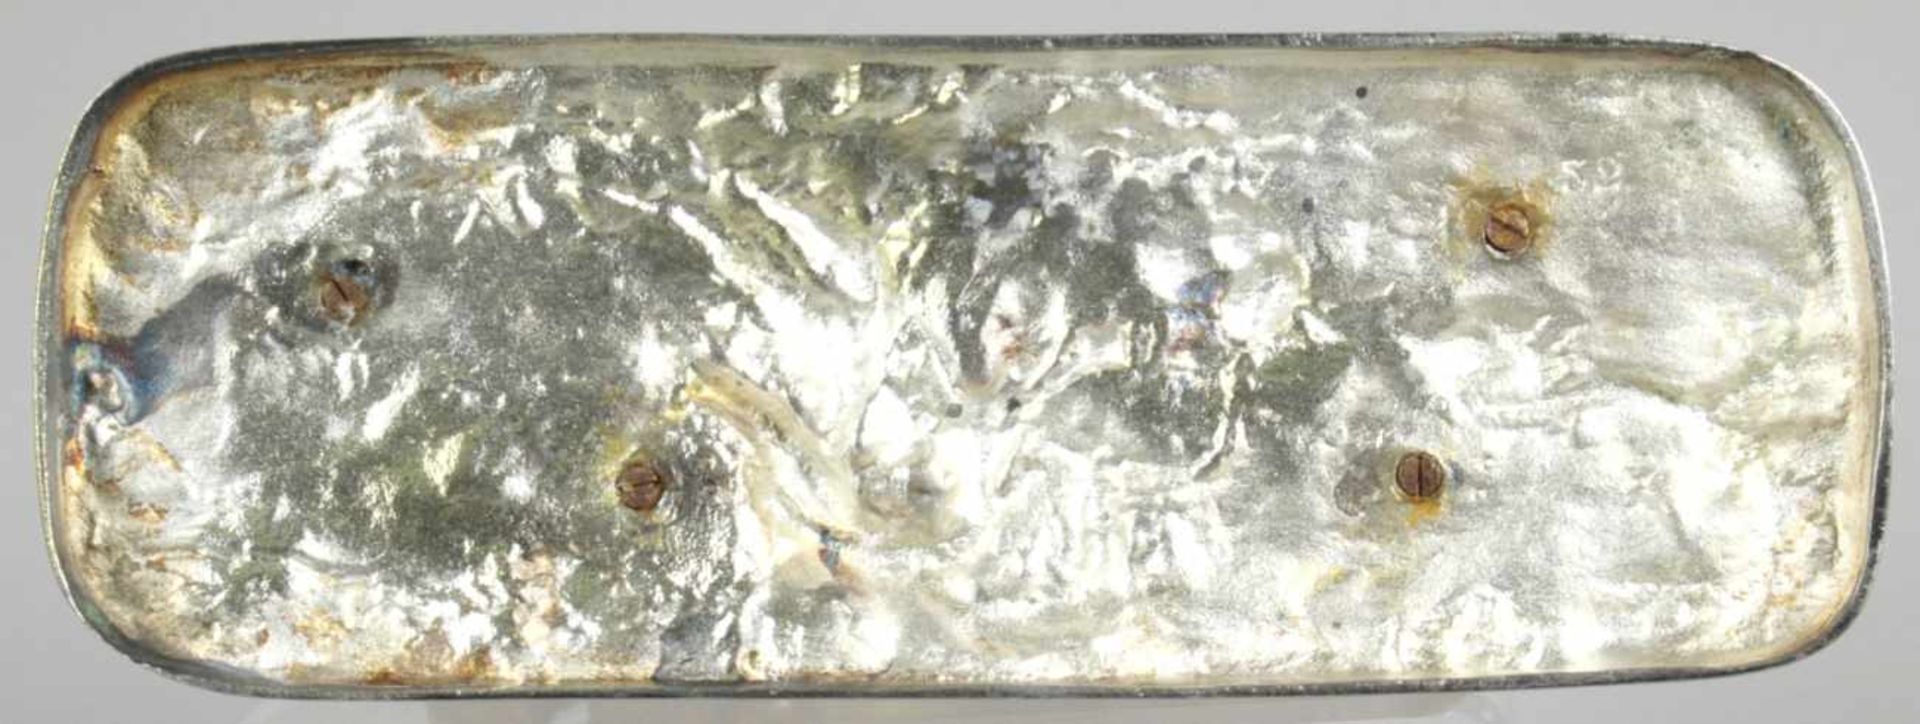 Bronze-Tierplastik, "Pferd", Mene, Pierre Jules, Paris 1810 - 1879 ebenda, vollplastische, - Bild 4 aus 4